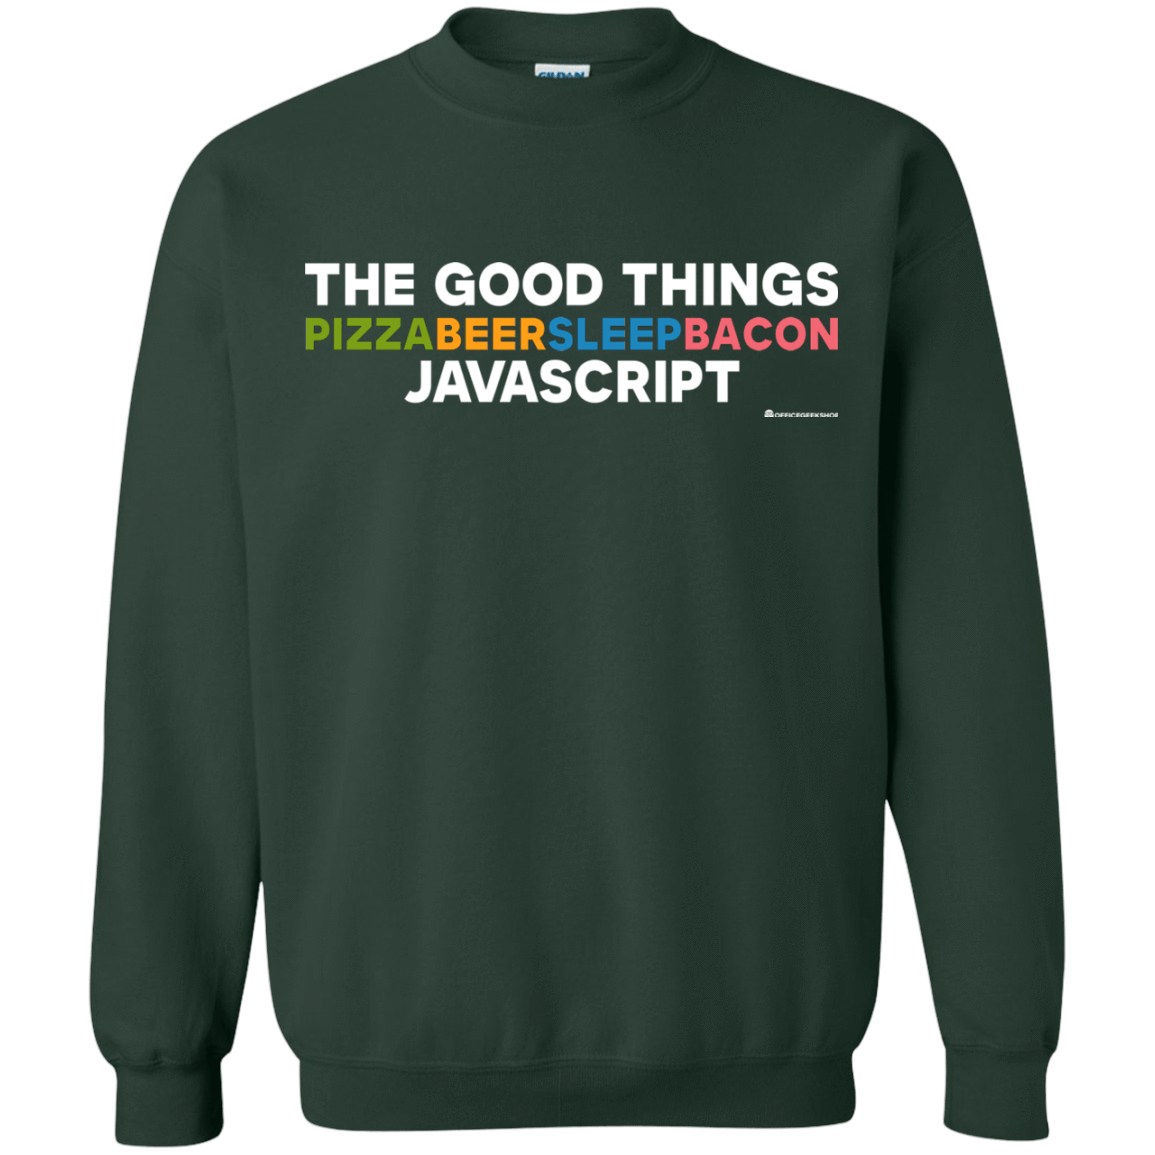 Sweatshirts Forest Green / Small The Good Things Crewneck Sweatshirt